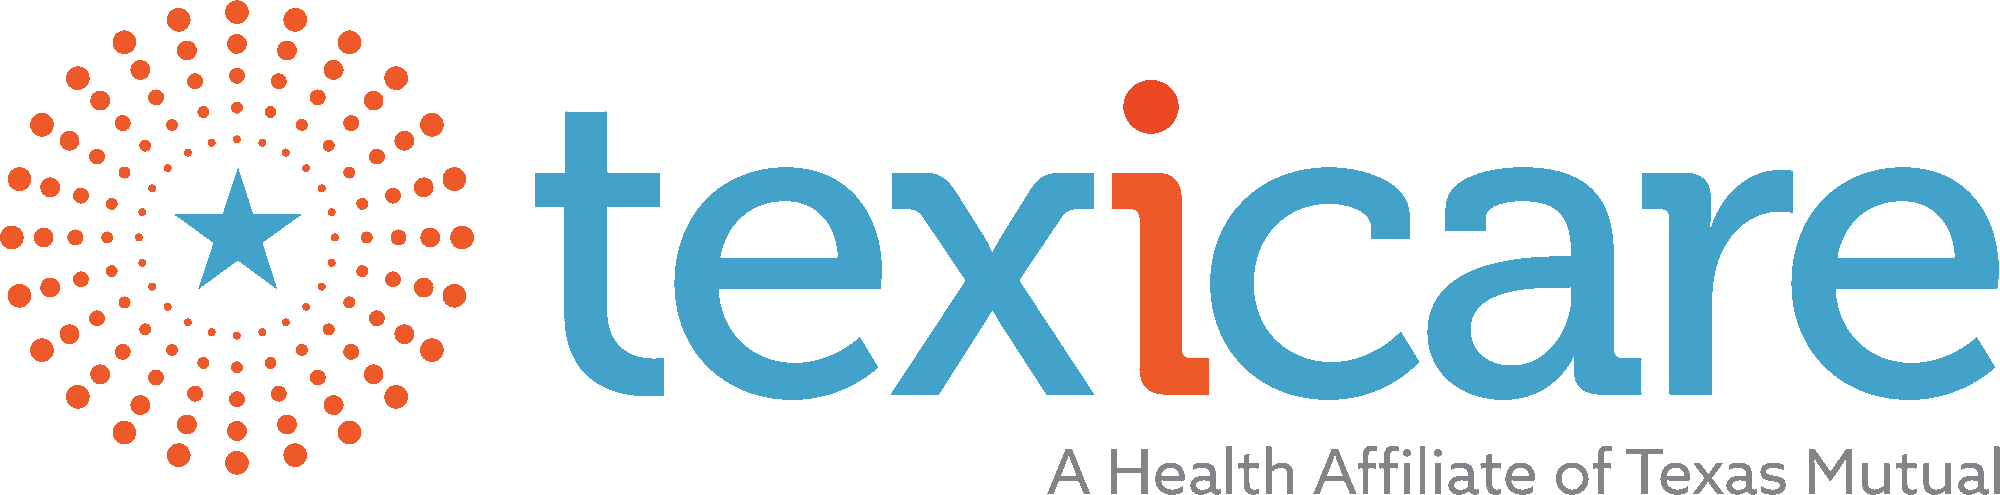 texicare orange and blue logo